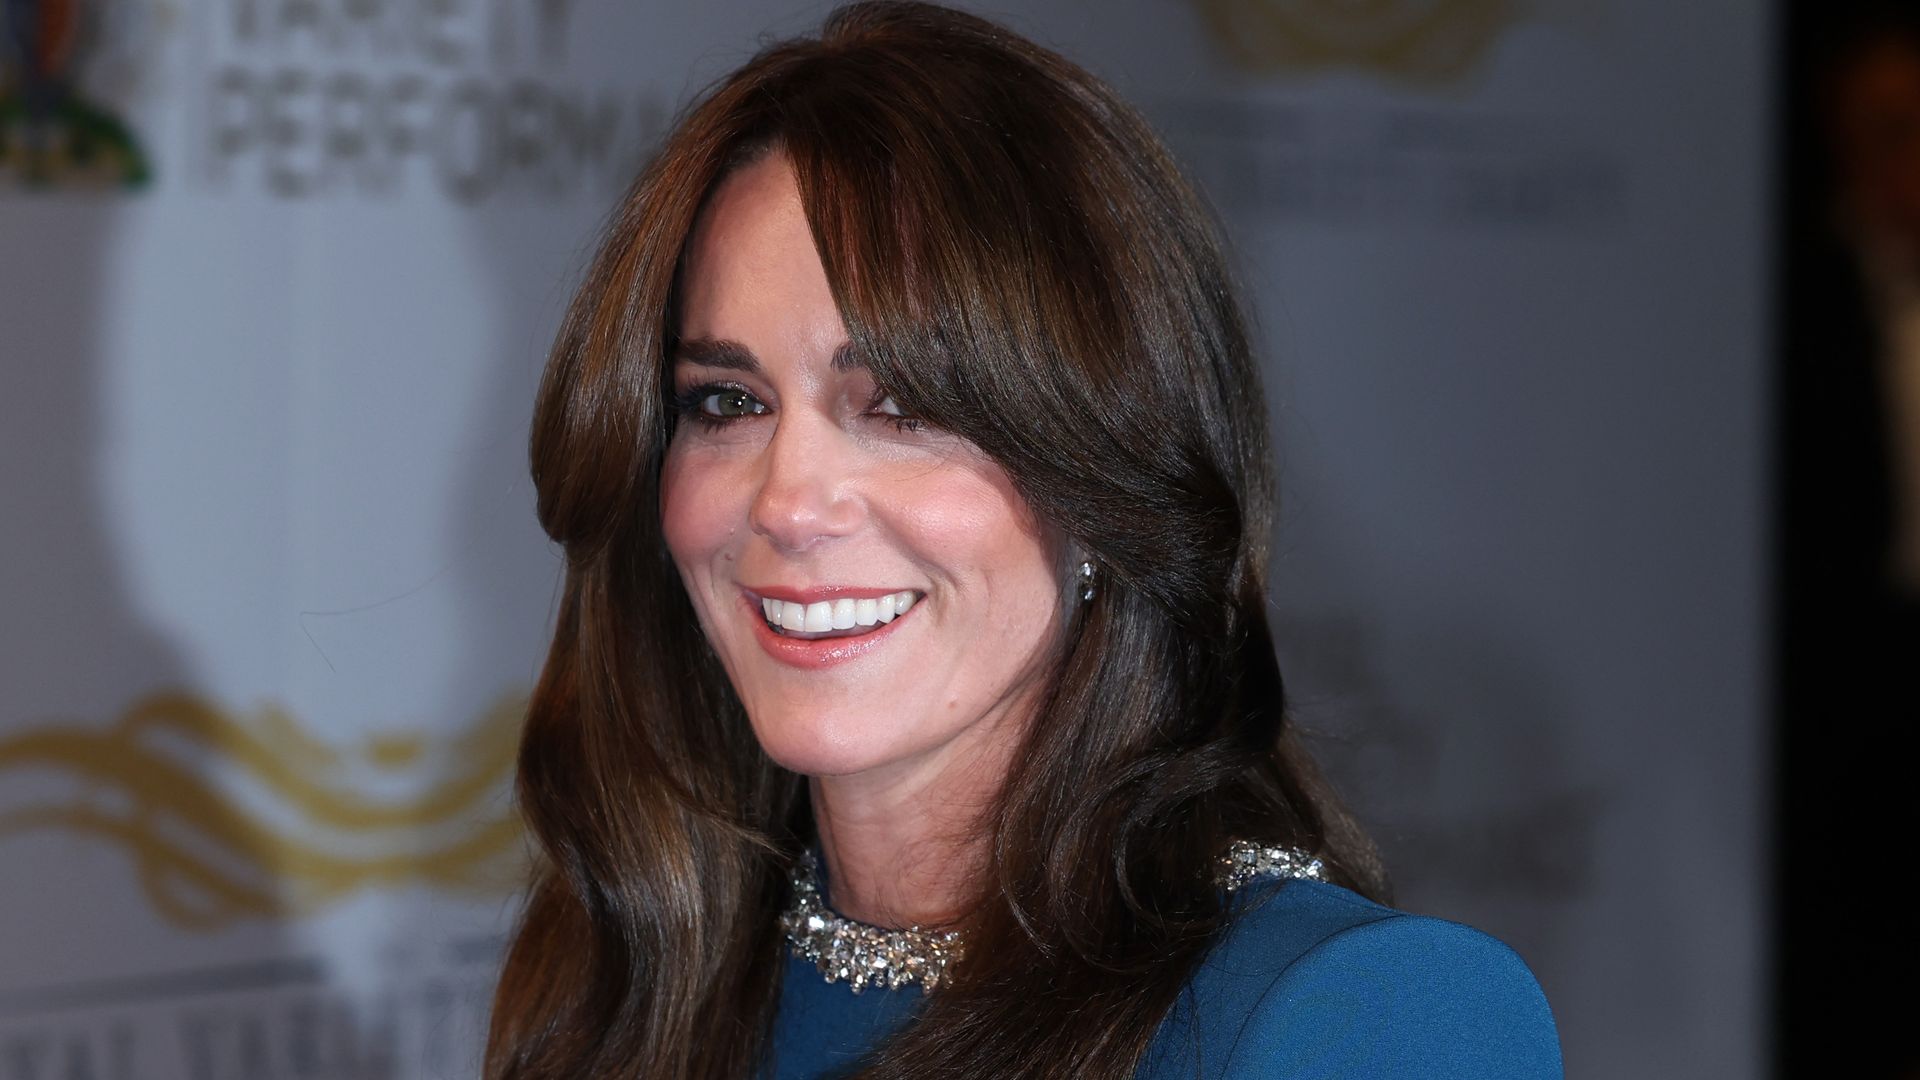 Kate Middleton smiling and wearing blue evening dress